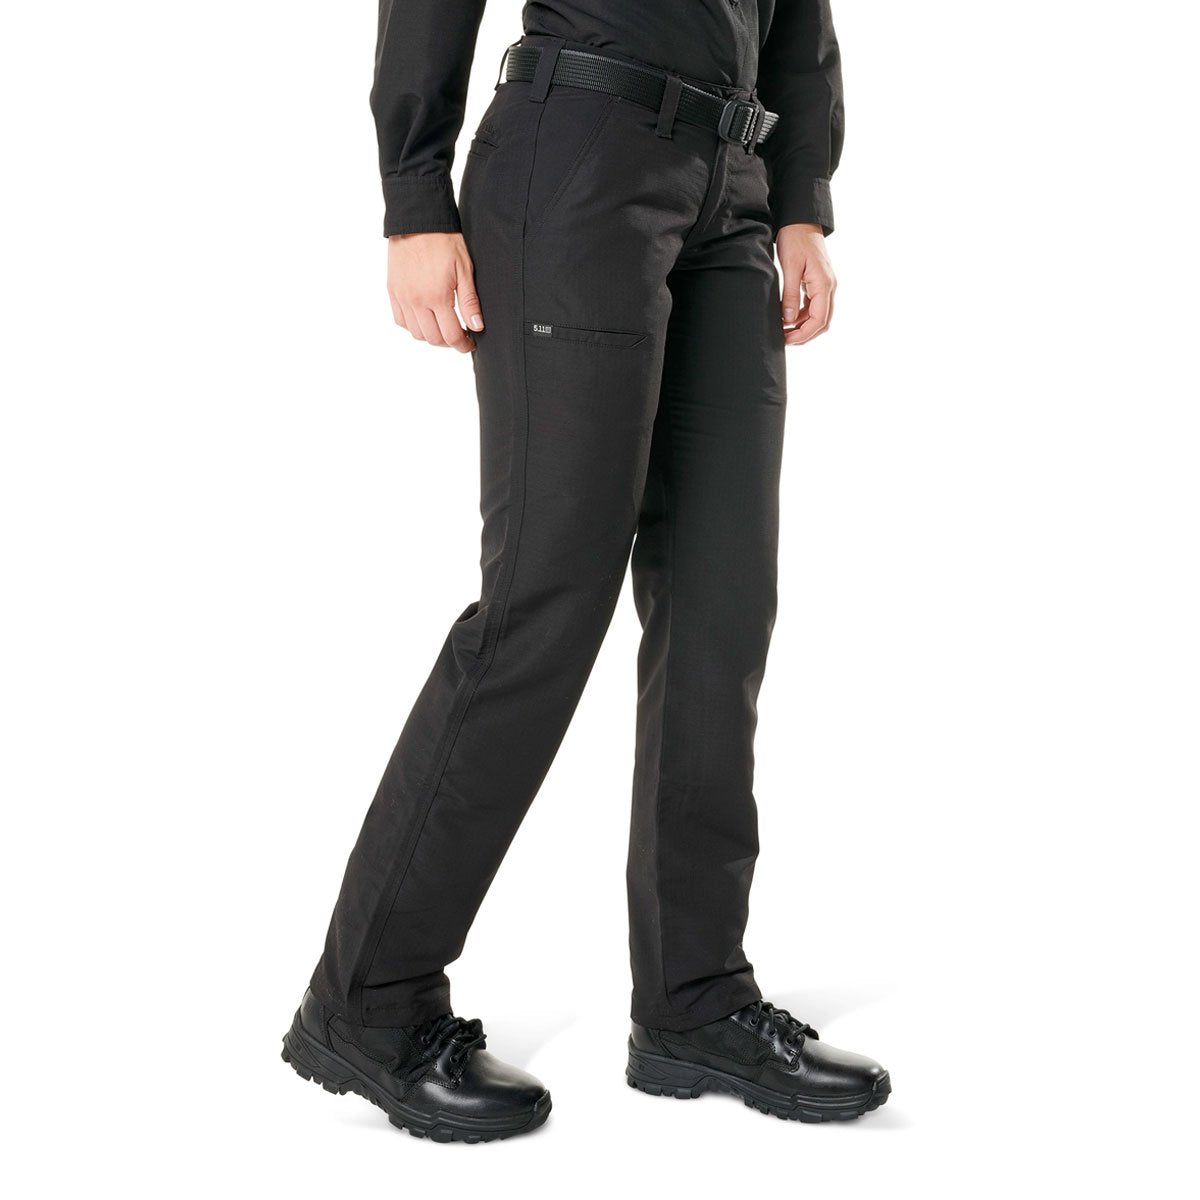 5.11 Tactical Women's Fast-Tac Urban Pant Black Pants 5.11 Tactical Tactical Gear Supplier Tactical Distributors Australia